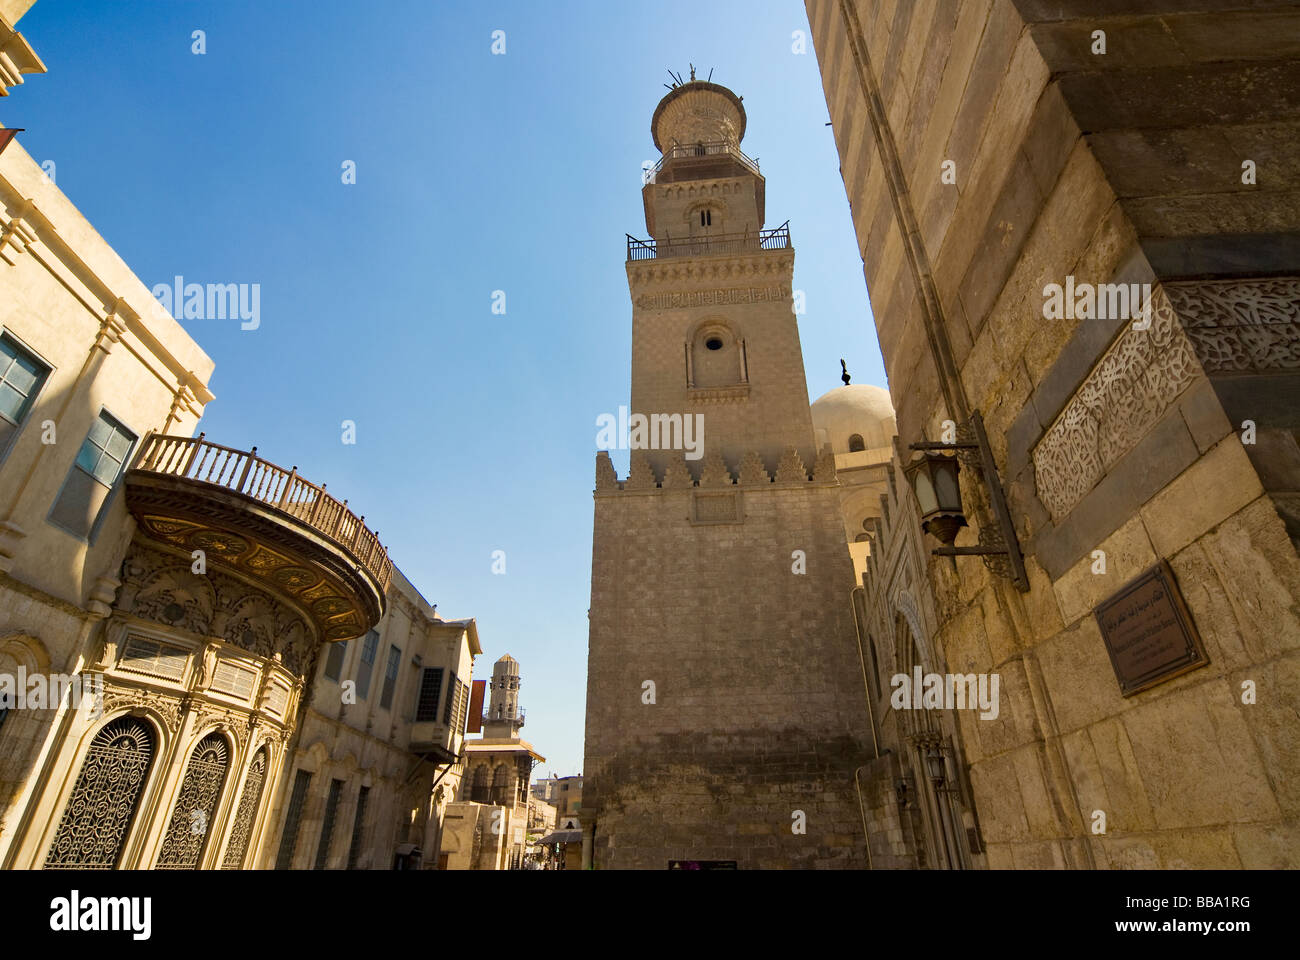 Minaret of Sultan Bu Nassir Coranic School and Sultan Barquq Palace Khan El Khalili Cairo Egypt North Africa Africa Stock Photo